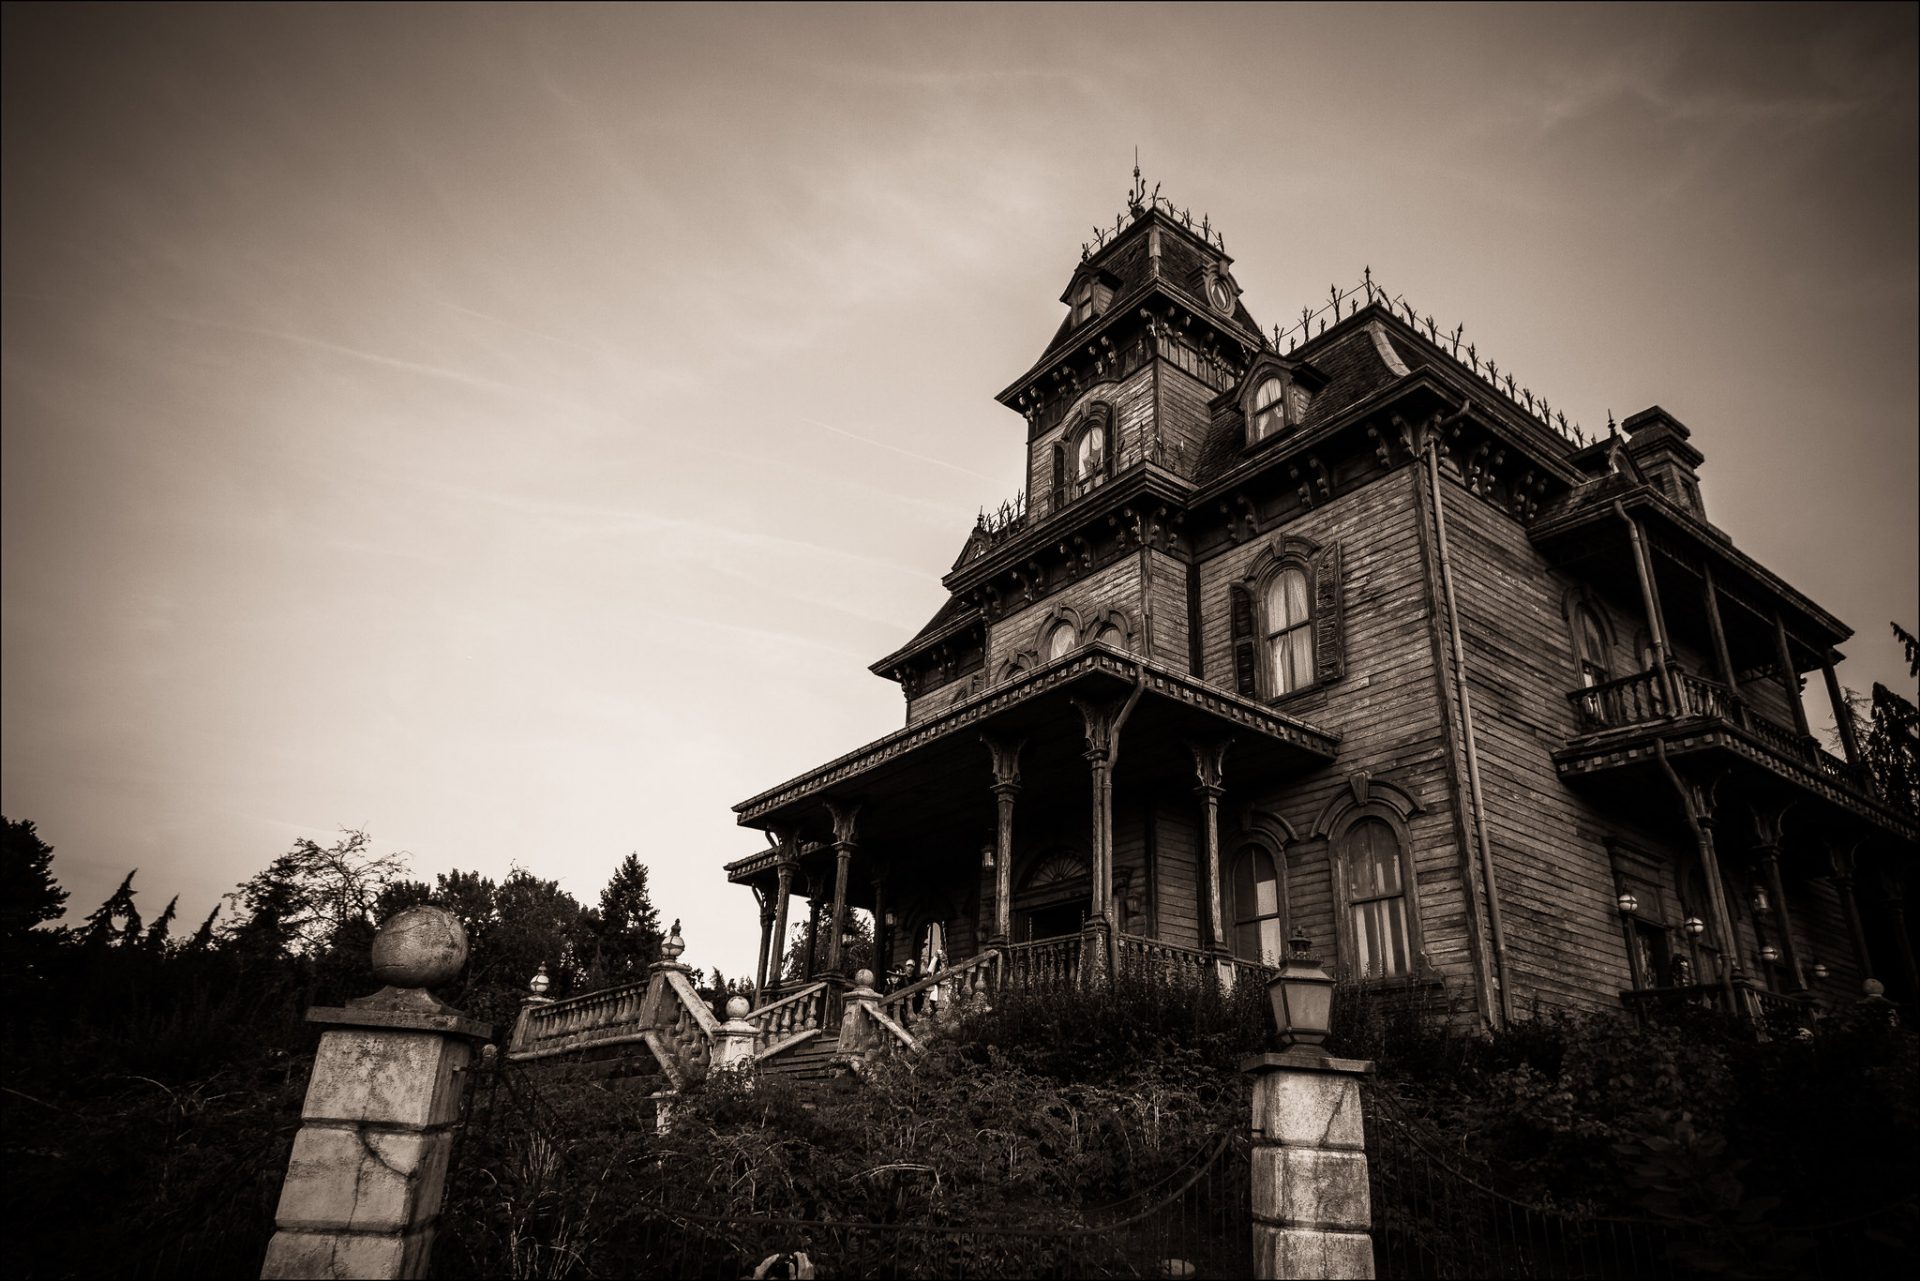 Michigan's Creepiest House Has a Sad Eerie Past Behind Its Doors